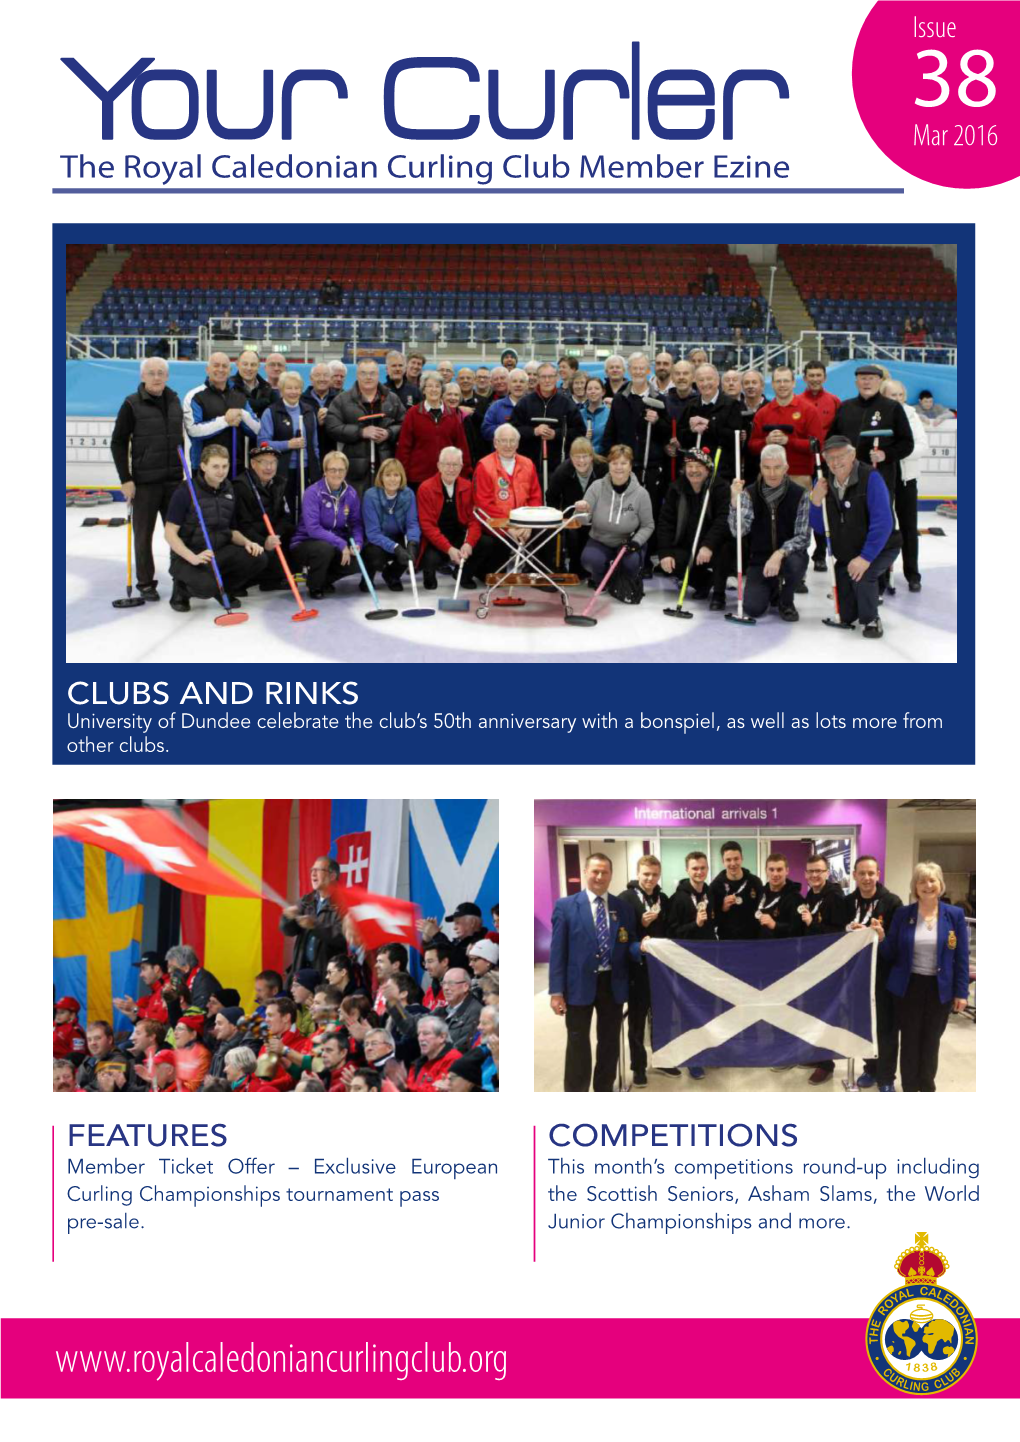 SCOTTISH SCHOOLS CHAMPIONSHIP Congratulations to Perth Academy on Winning the Scottish Schools Curling Championship 2016